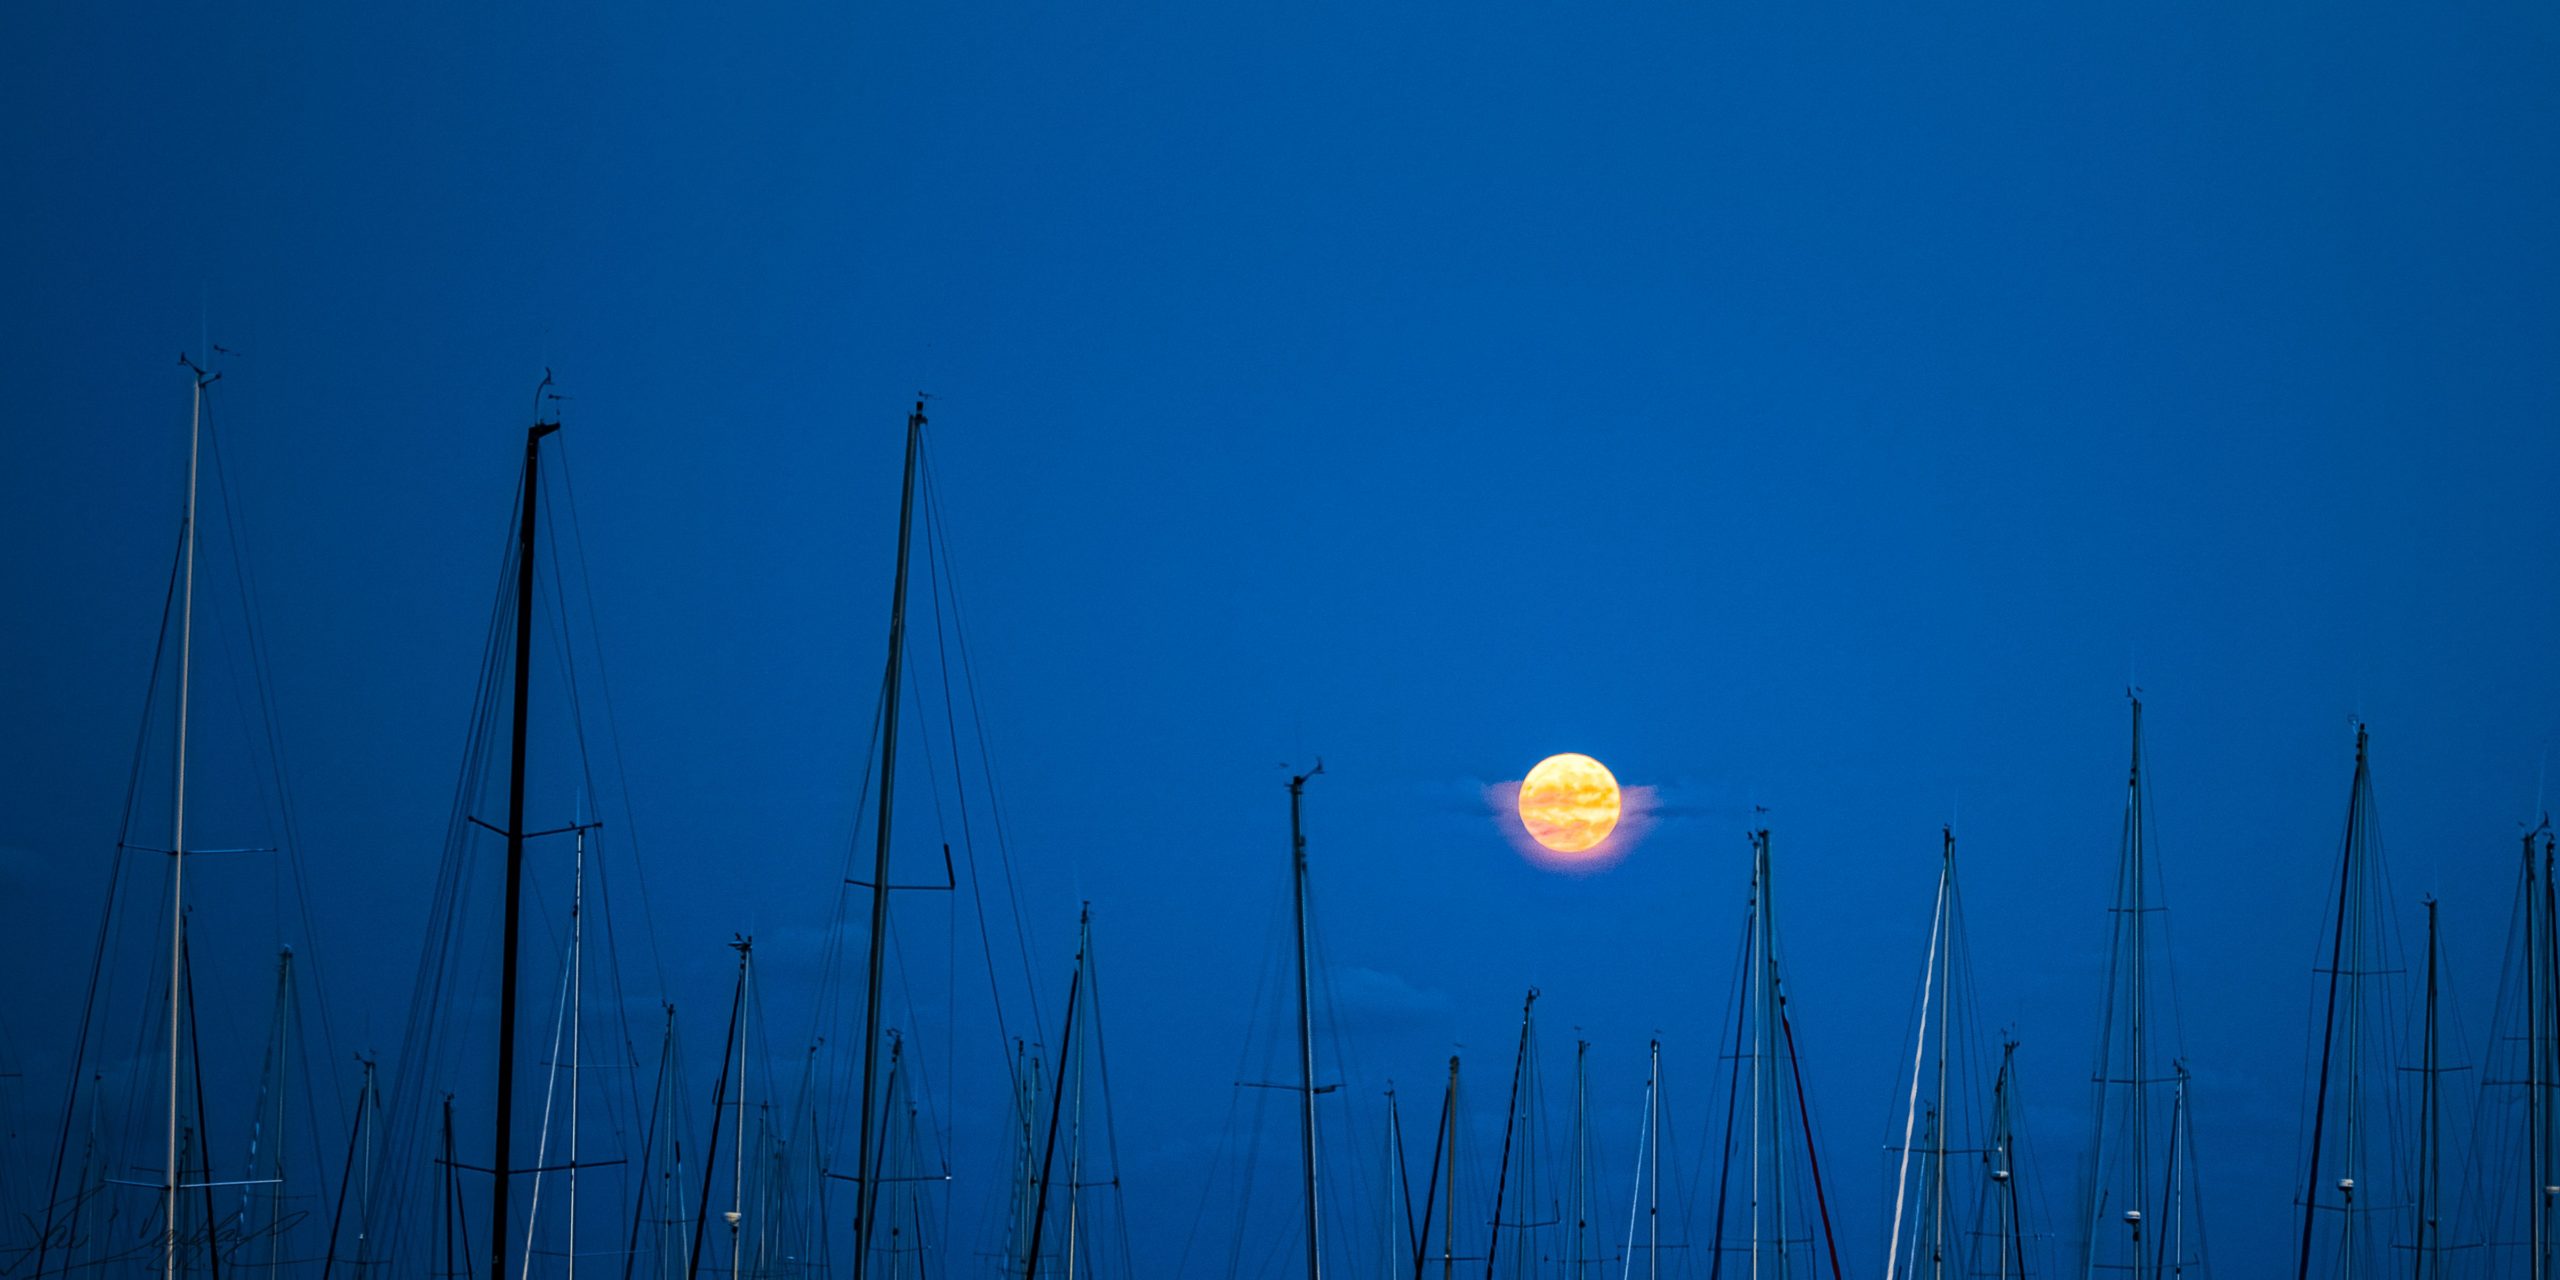 Canon, Canon EOS7D, France, La Grande Motte, Hérault, Evening, Moonrise, Boats, Masts,